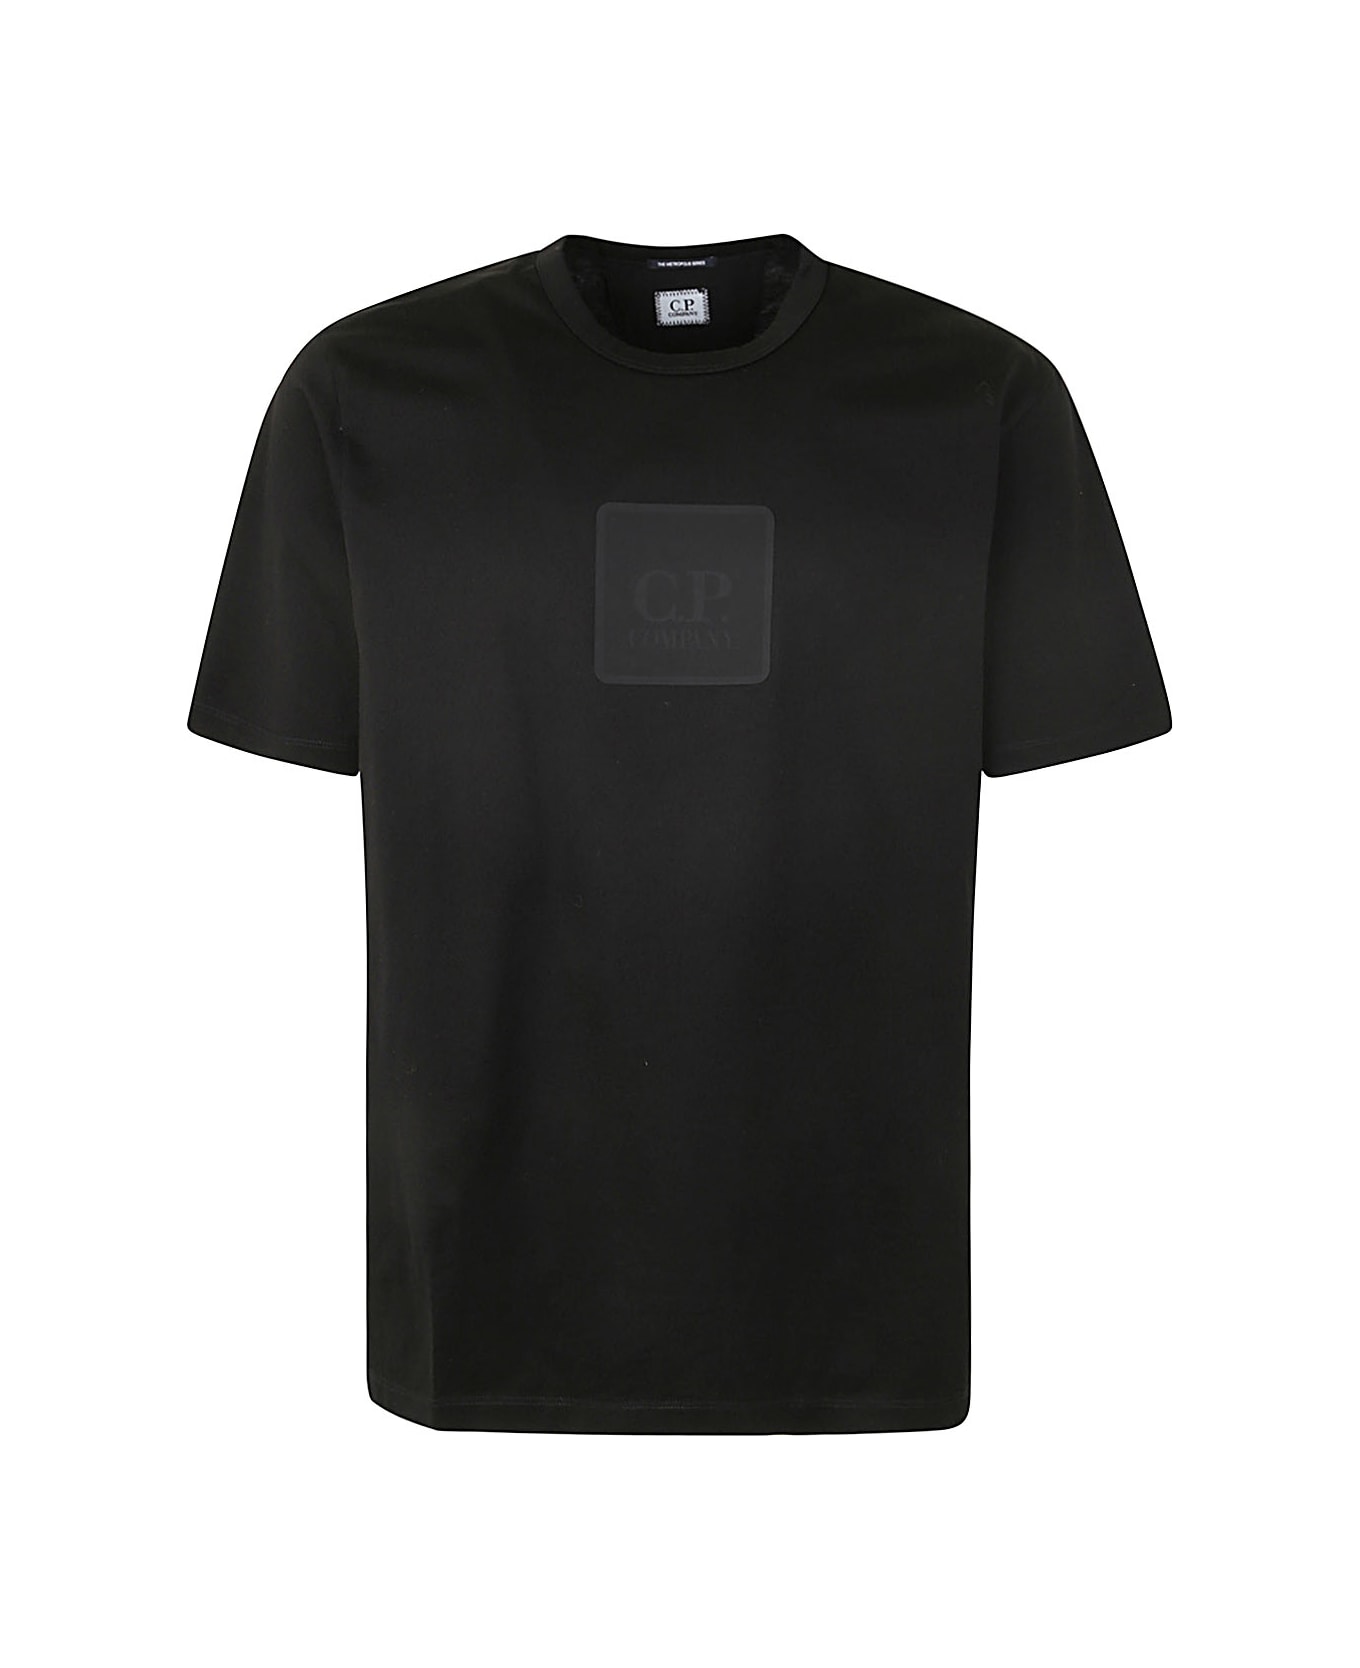 C.P. Company Metropolis Series Mercerized Jersey Logo Badge T-shirt - Black